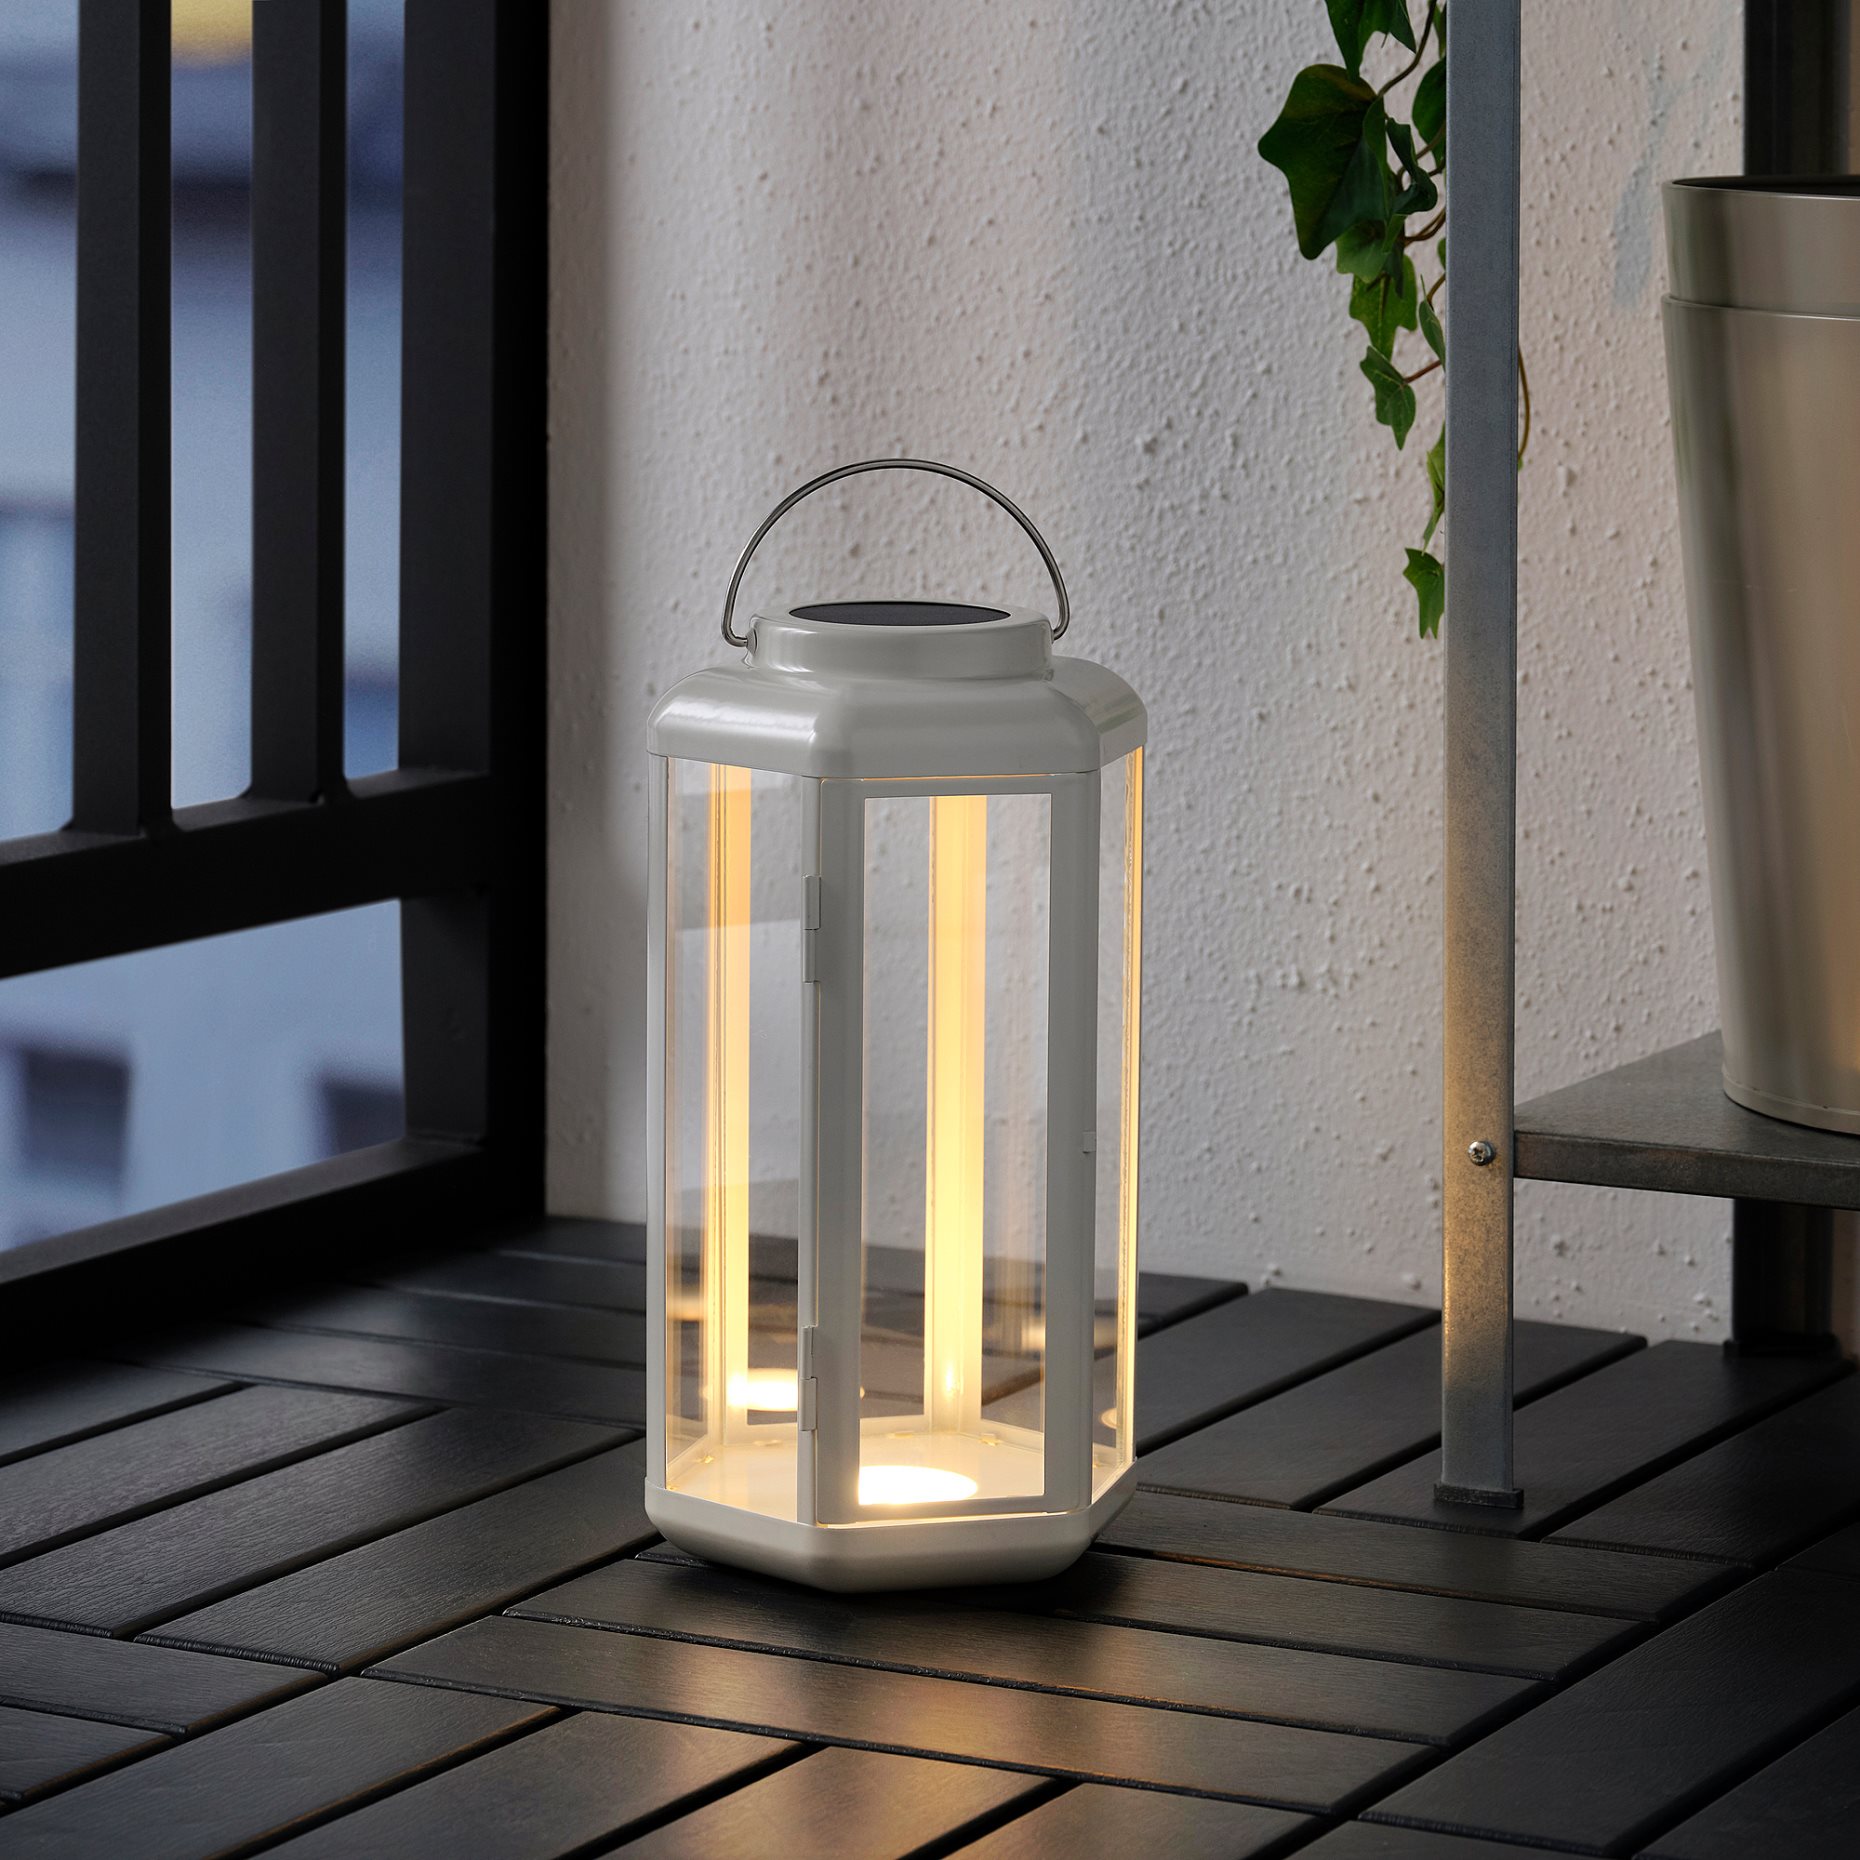 SOLVINDEN, solar-powered table lamp with built-in LED light source/lantern, 28 cm, 605.145.77